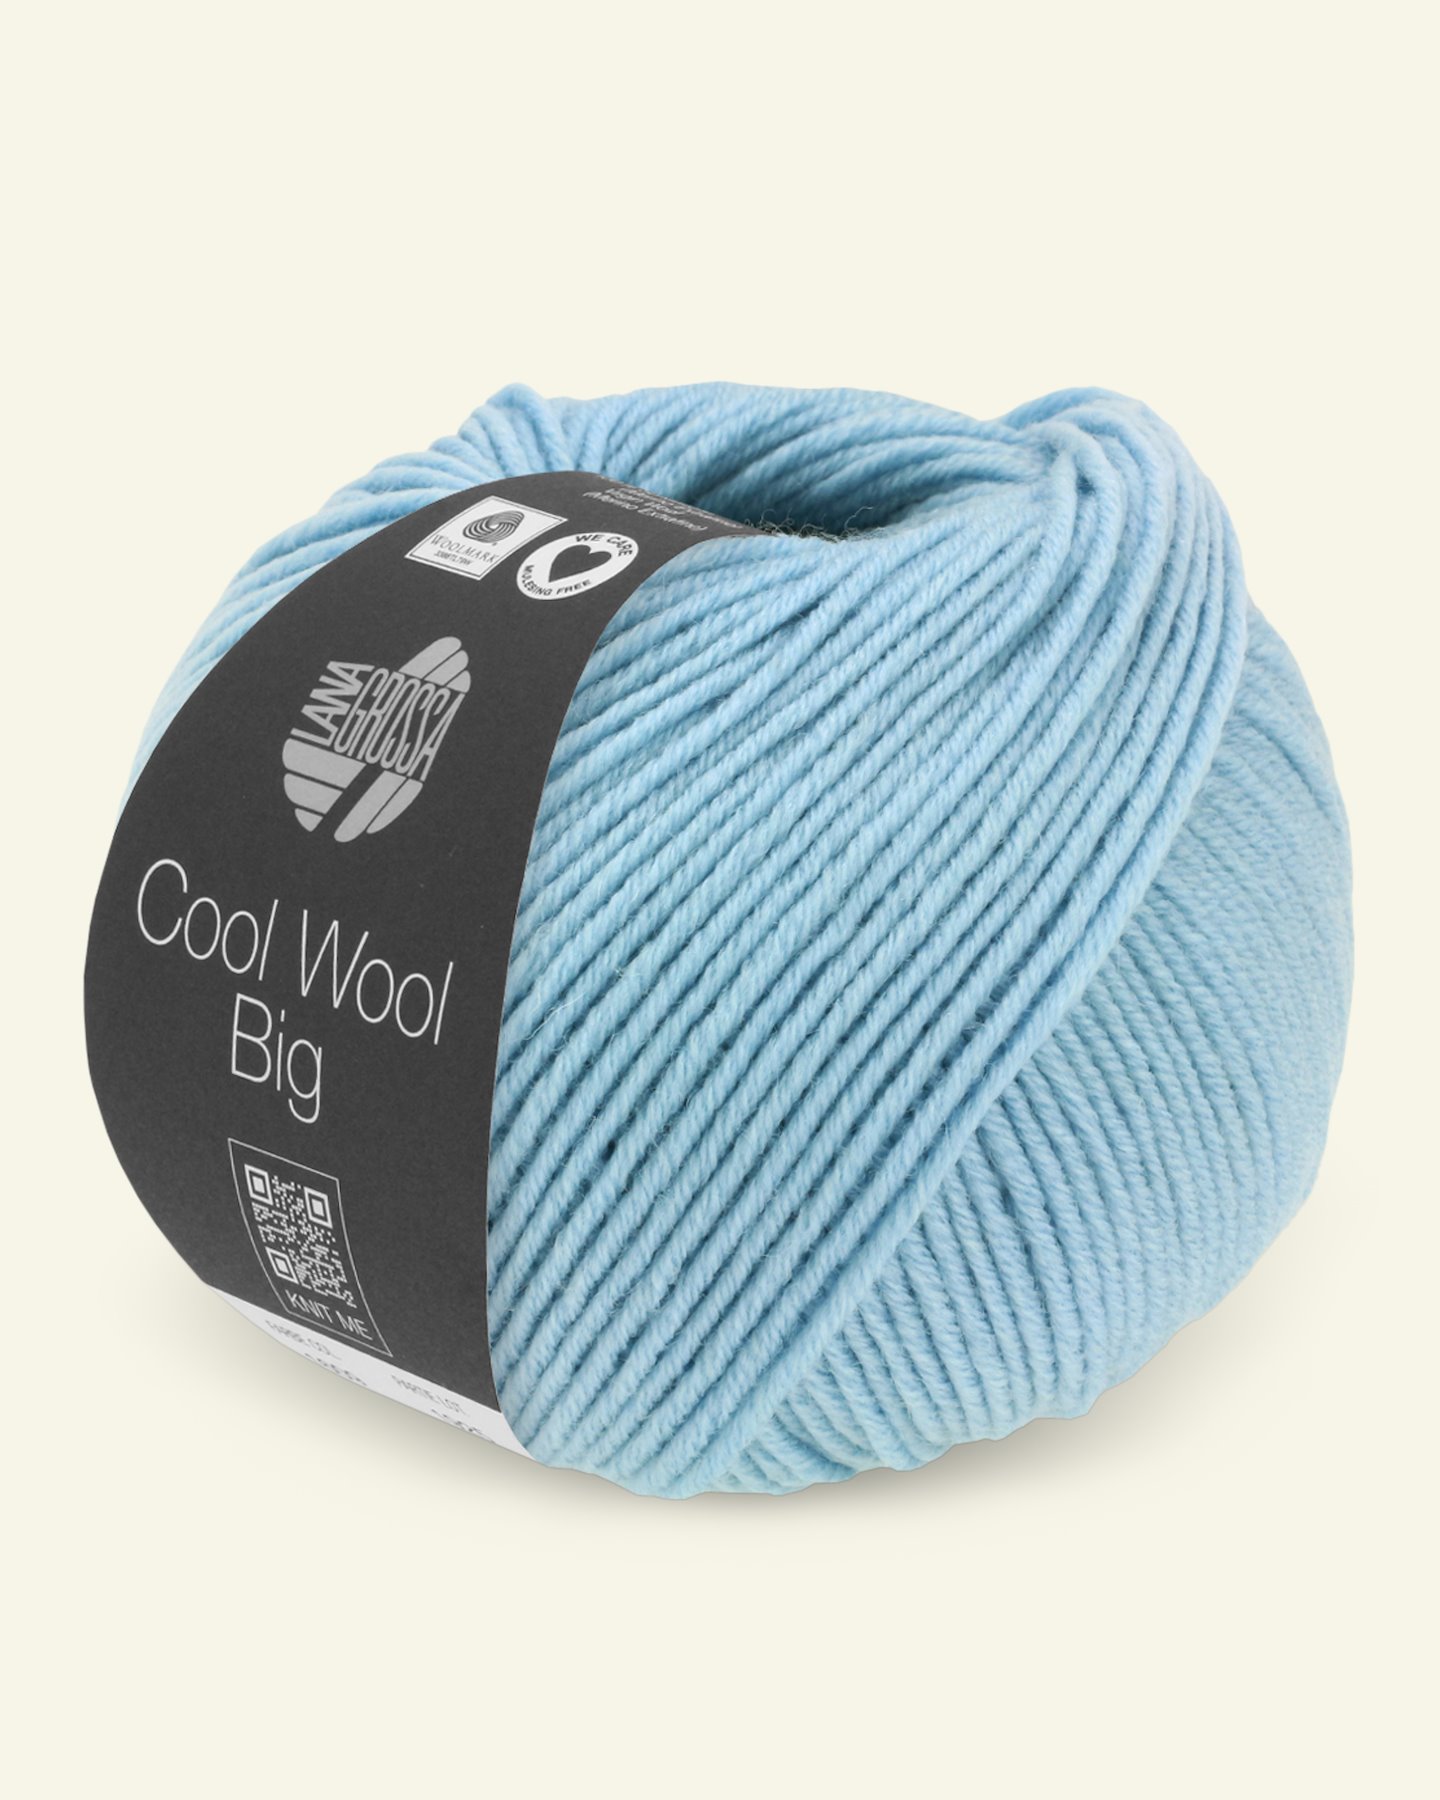 Lana Grossa, extrafine merino wool yarn "Cool Wool Big", light blue mel 90001089_pack